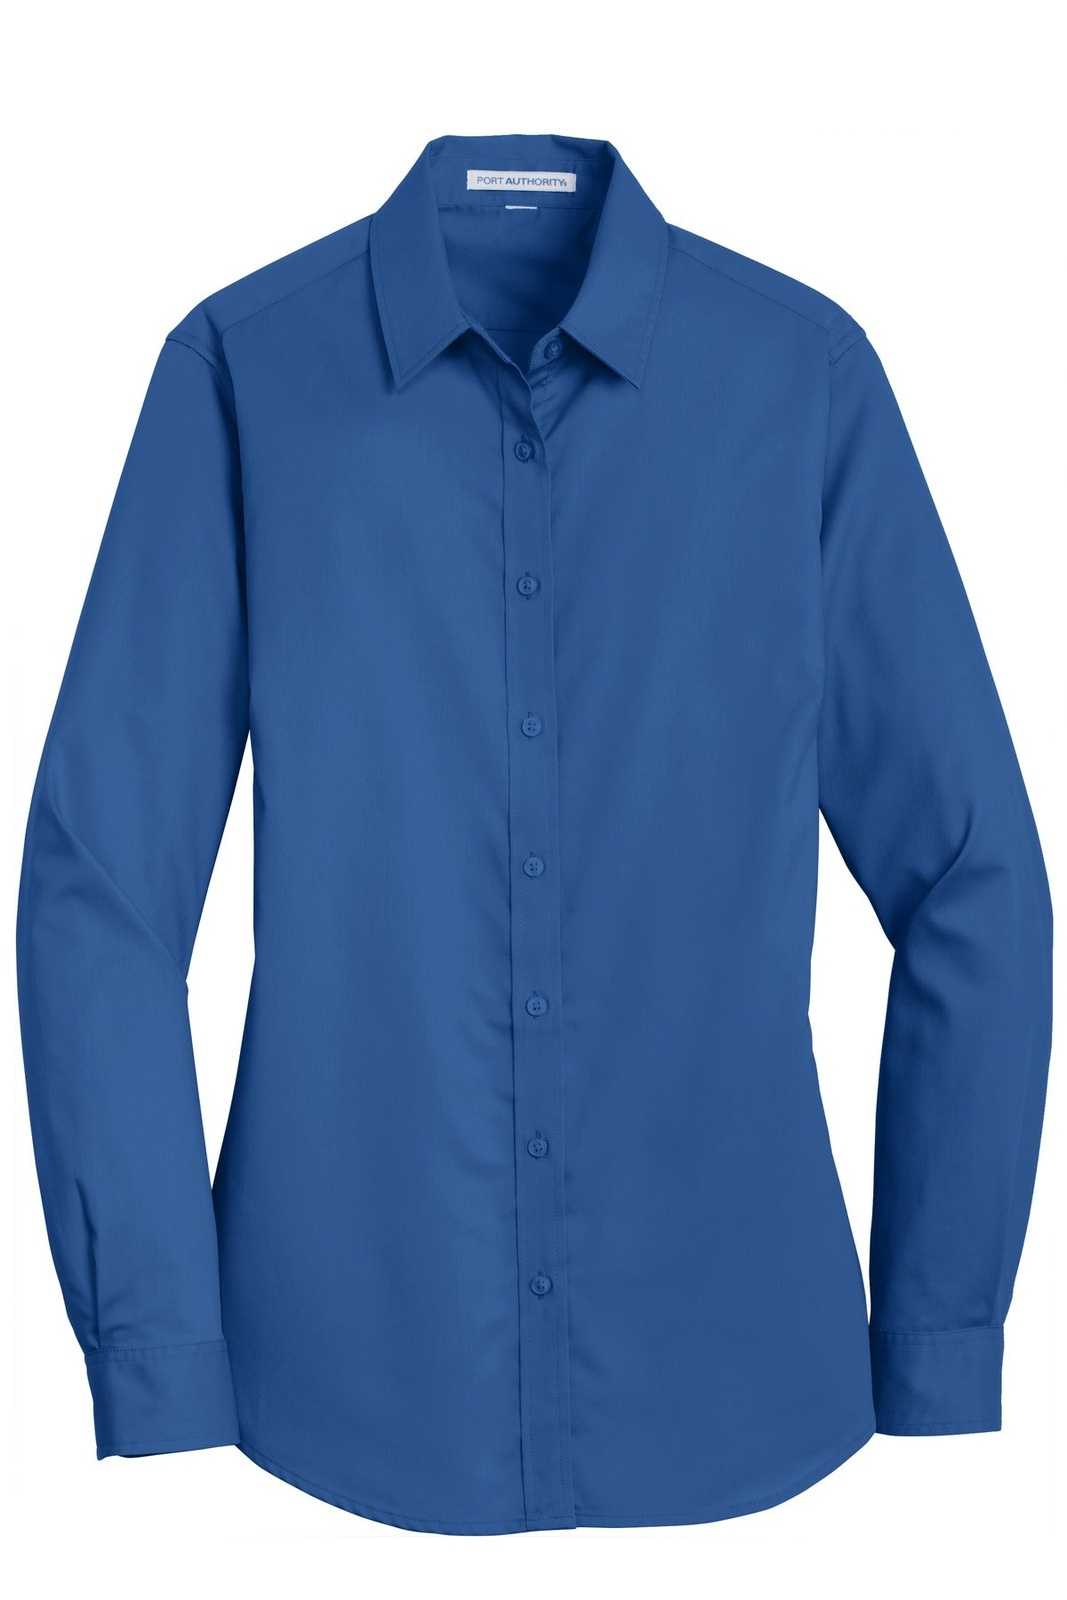 Port Authority L663 Ladies Superpro Twill Shirt - True Blue - HIT a Double - 5